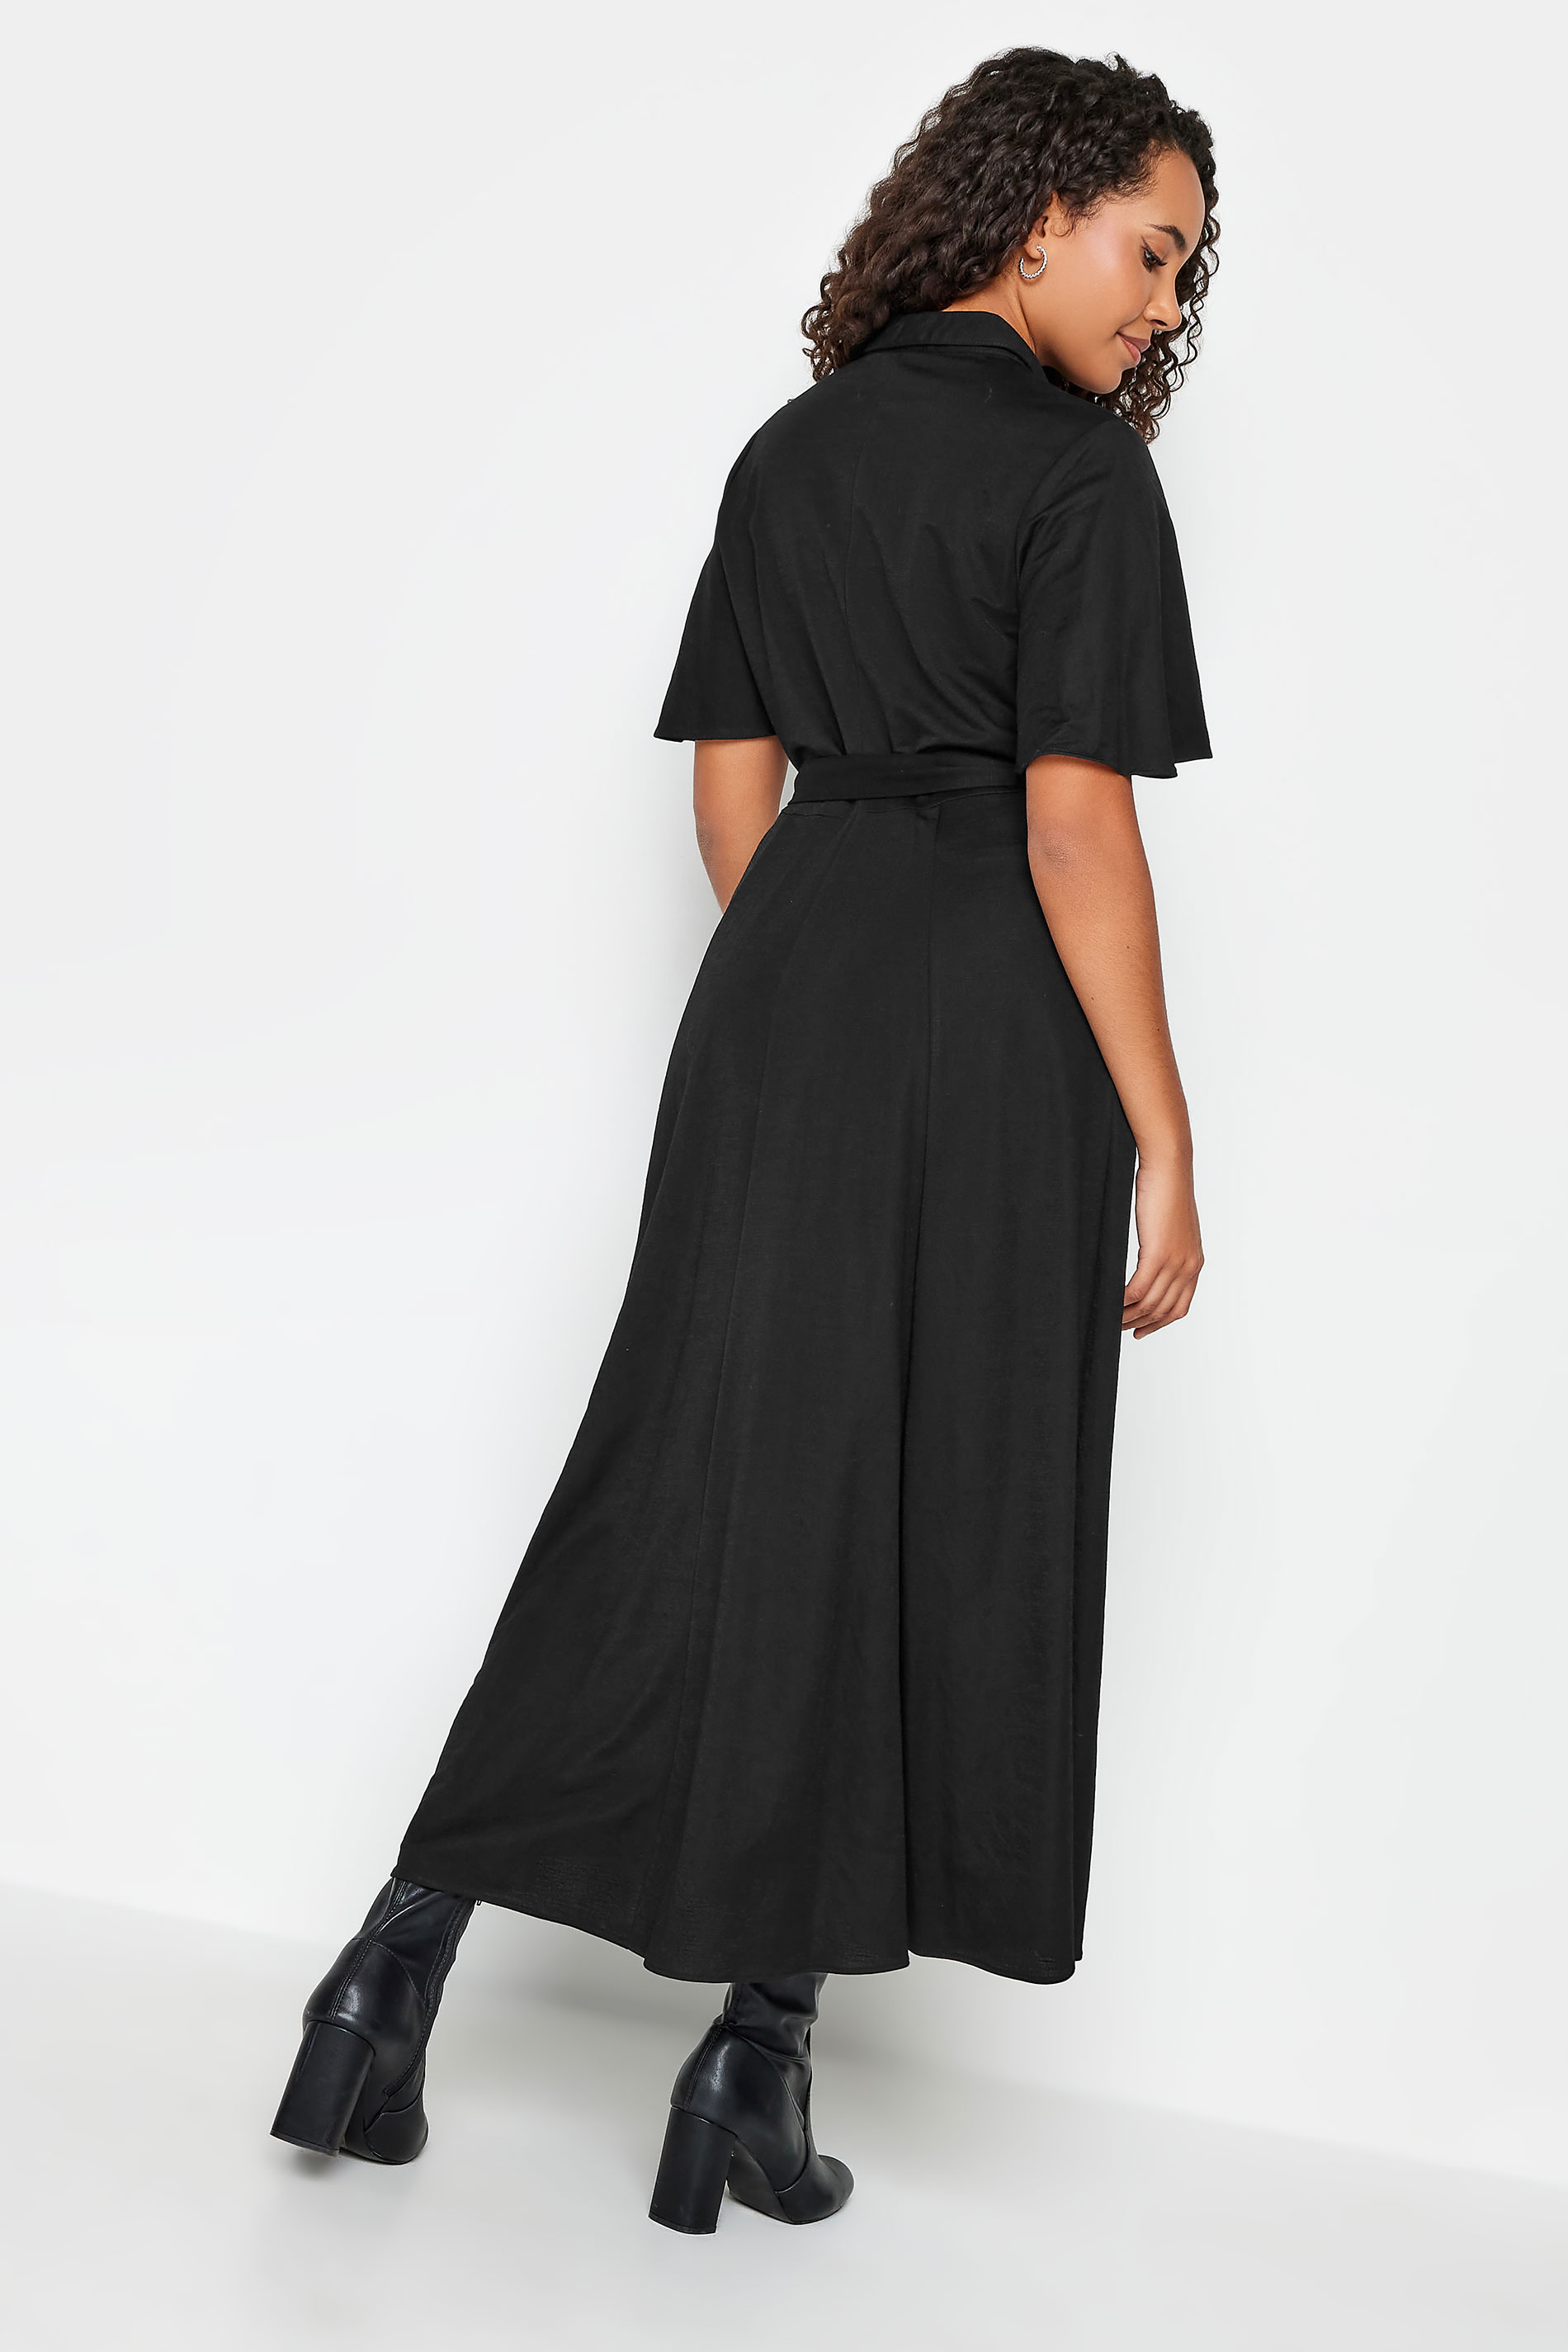 M&Co Black Button Through Collared Midaxi Dress | M&Co 3